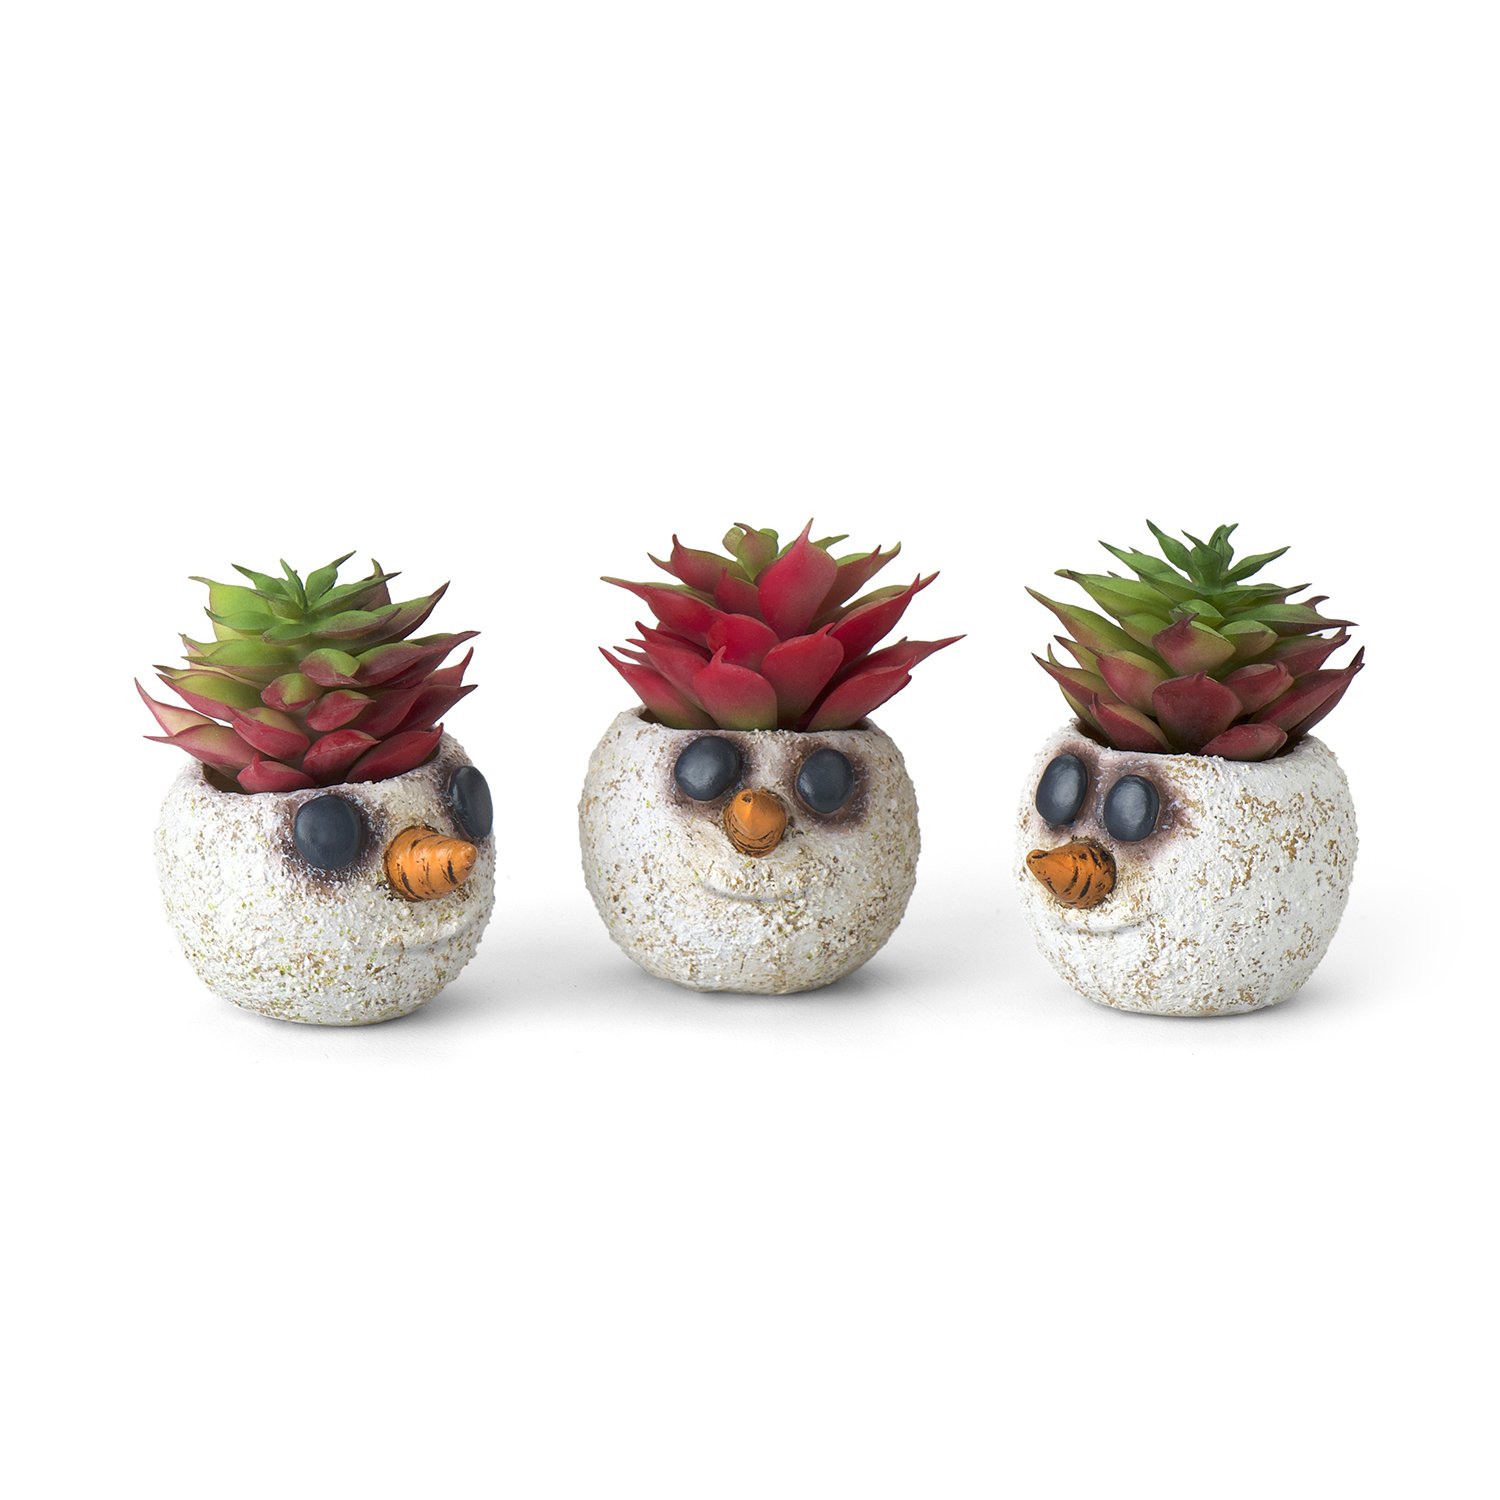 G21521 - Snowman Head Mini Planter Set of 3 